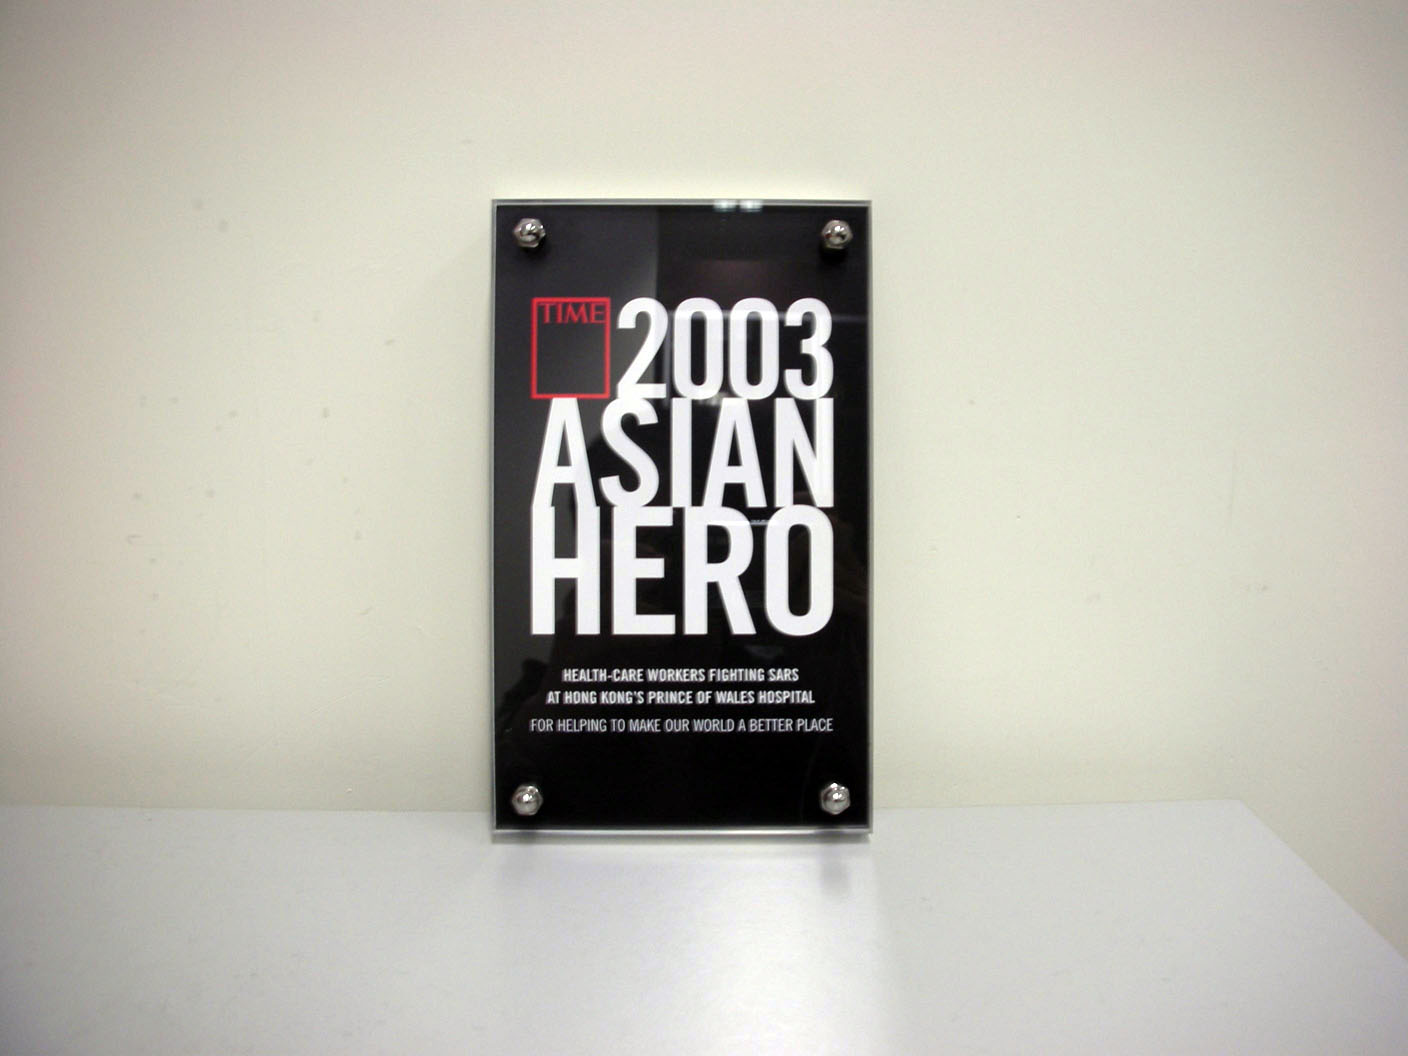 'Asian Hero' Award from the <em>Time</em> magazine (2003)